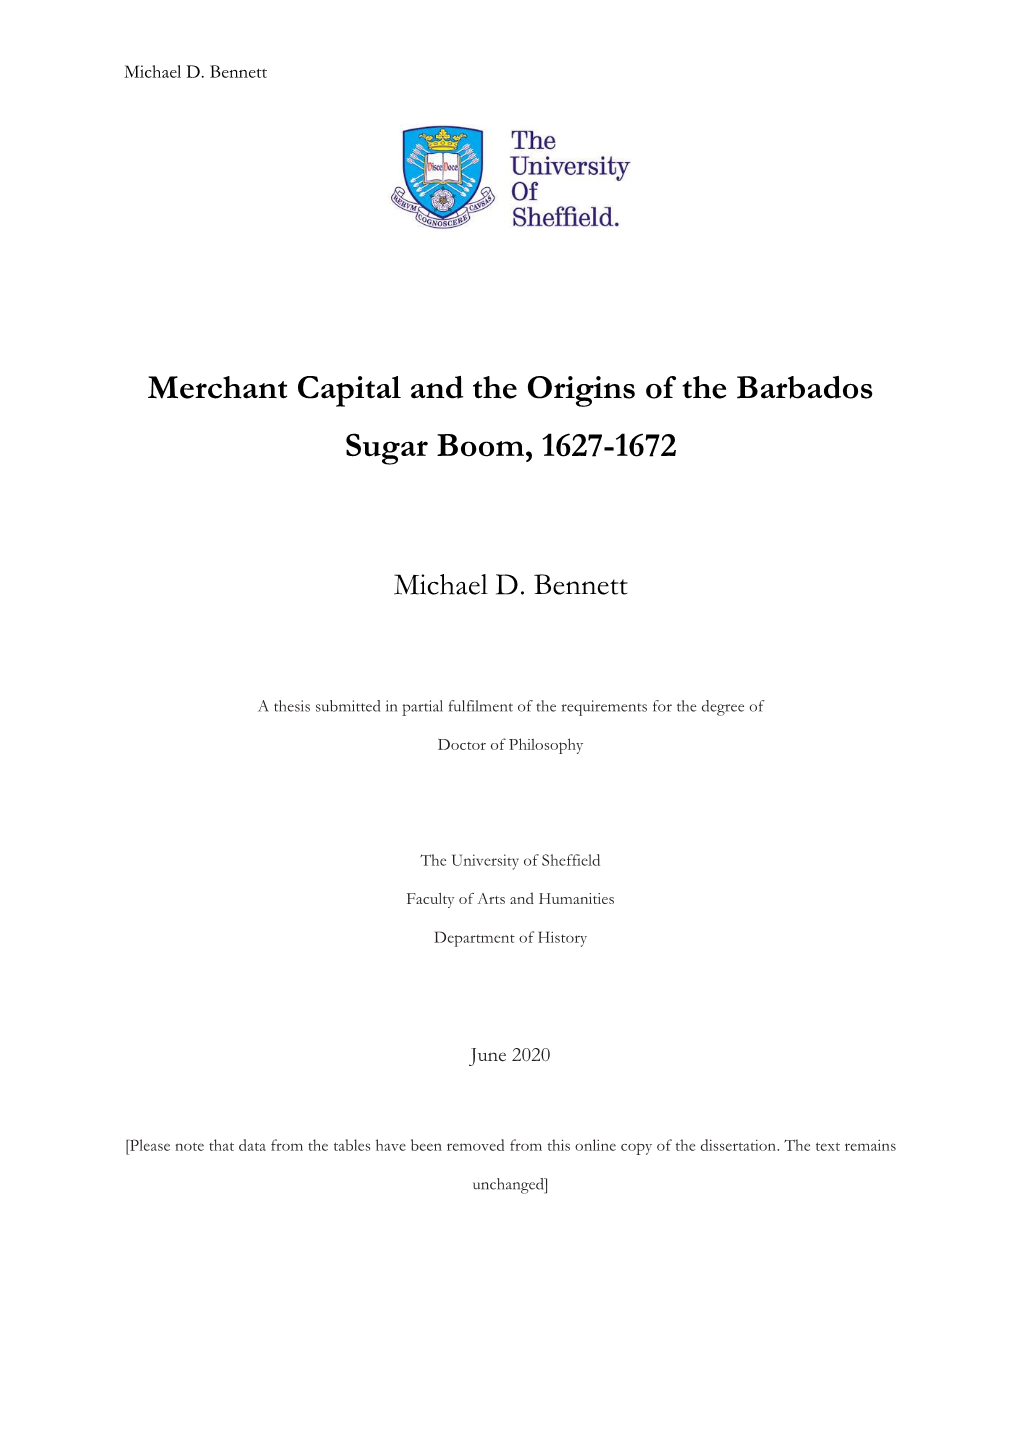 Merchant Capital and the Origins of the Barbados Sugar Boom, 1627-1672